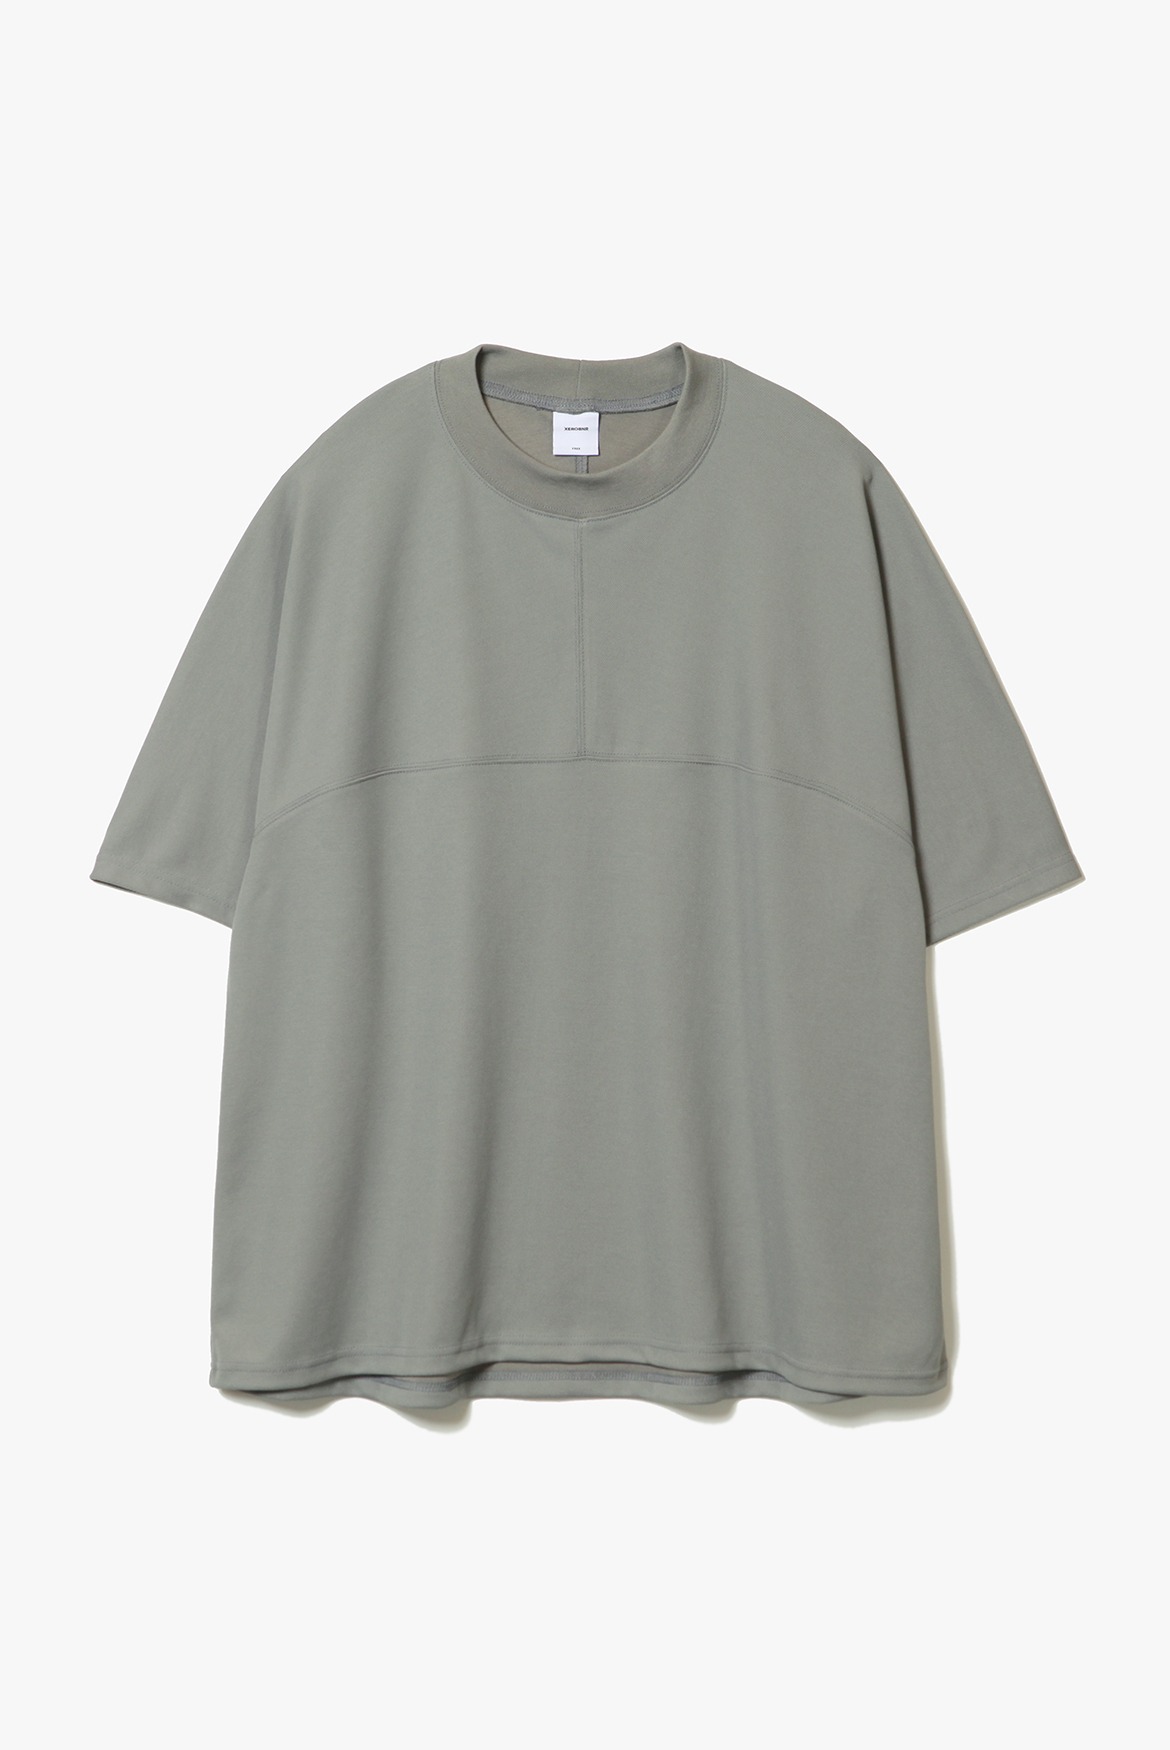 Dolman Sleeve T-Shirts [Boston Khaki]